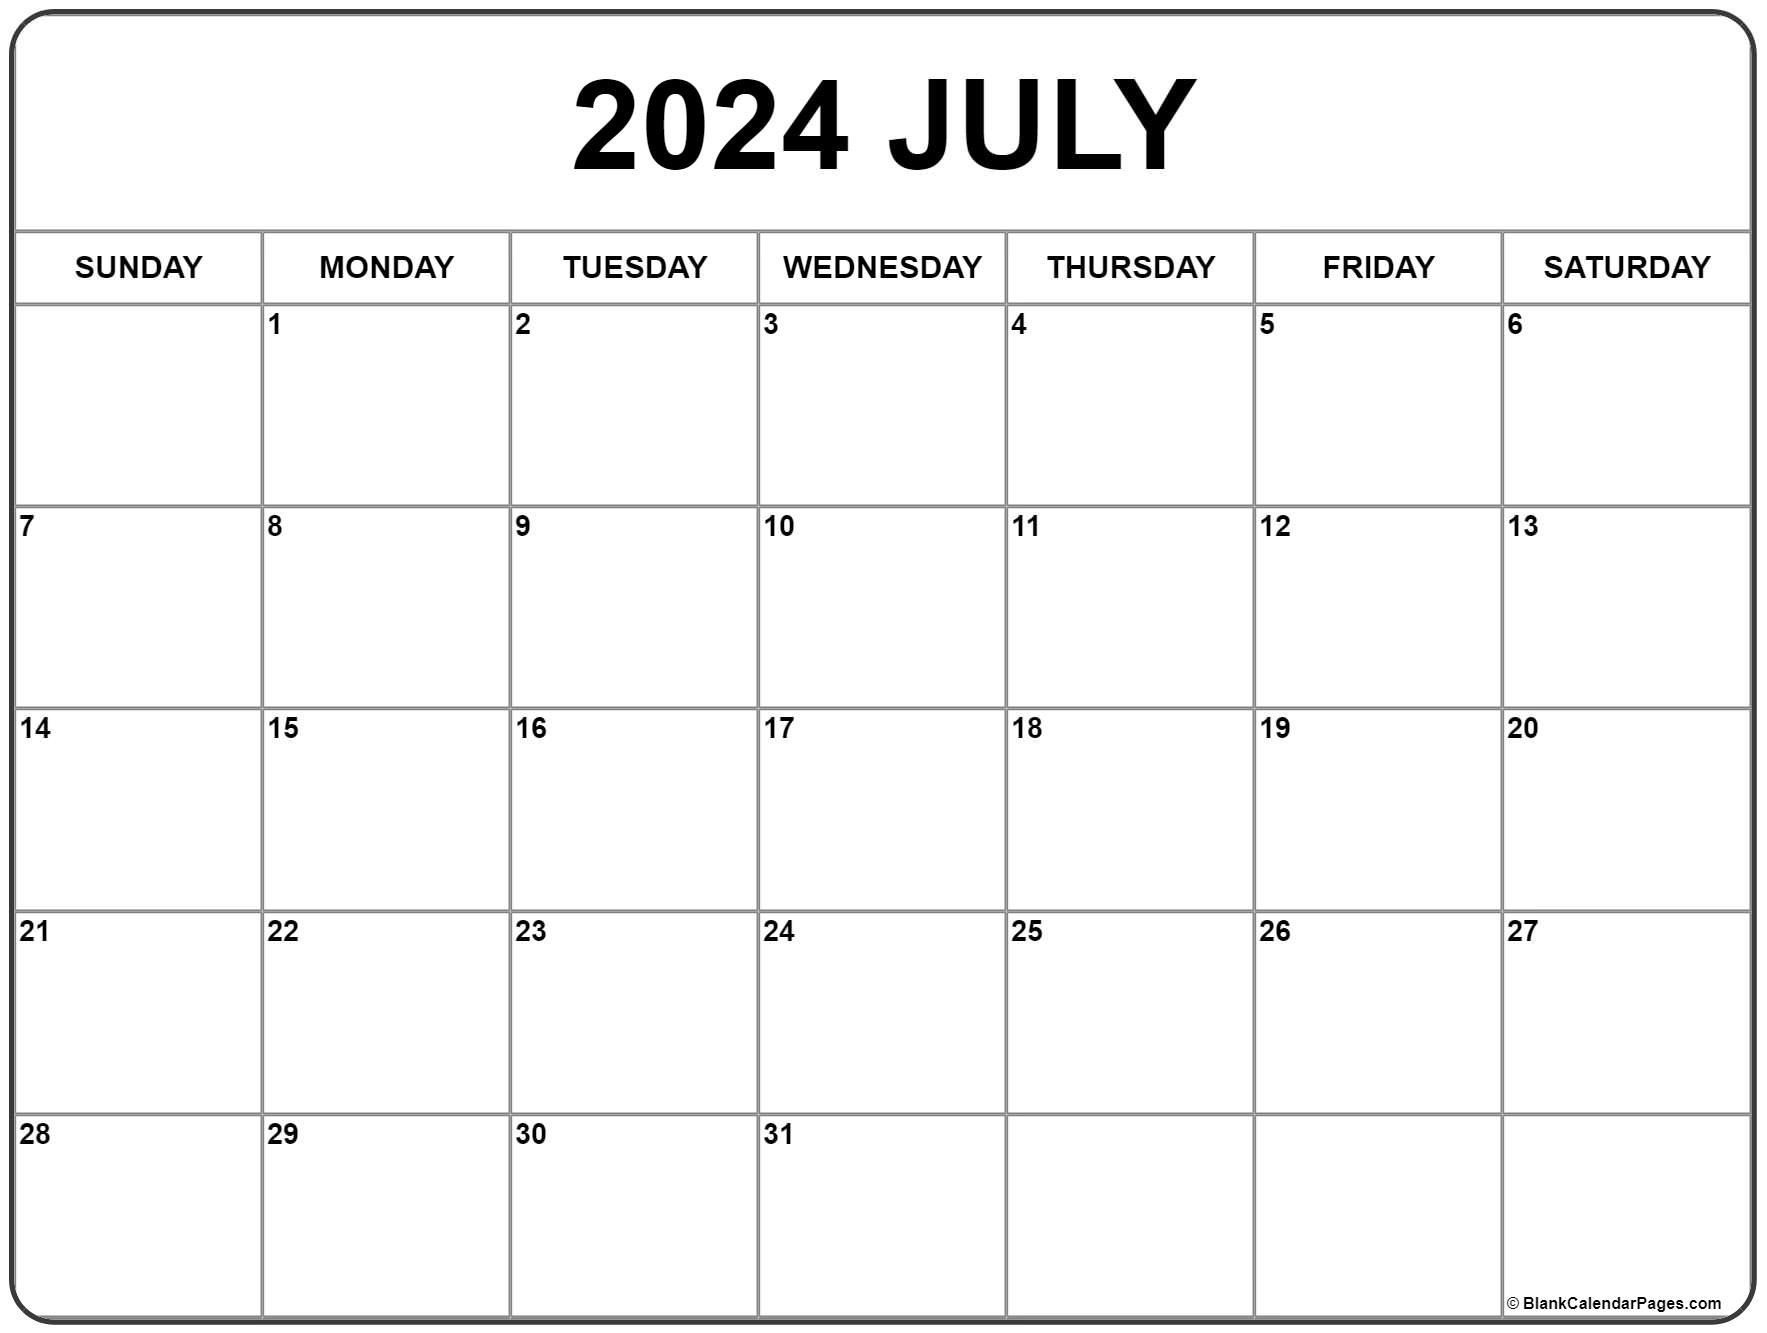 July 2024 Calendar | Free Printable Calendar with regard to 2024 July Calendar Template